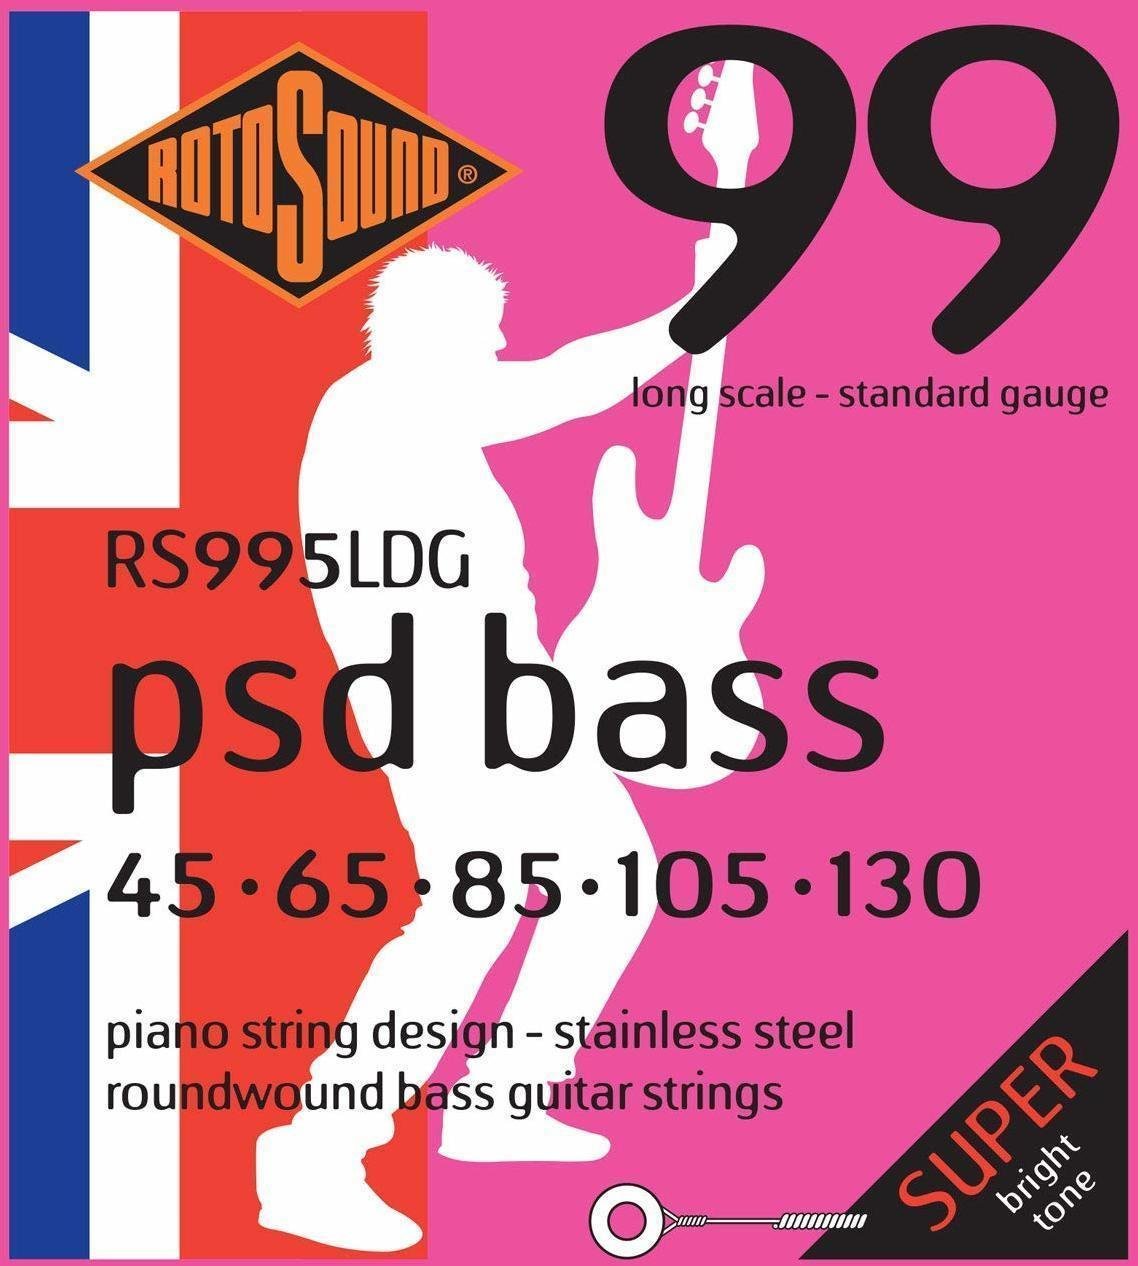 Bassguitar strings Rotosound RS 995 LDG